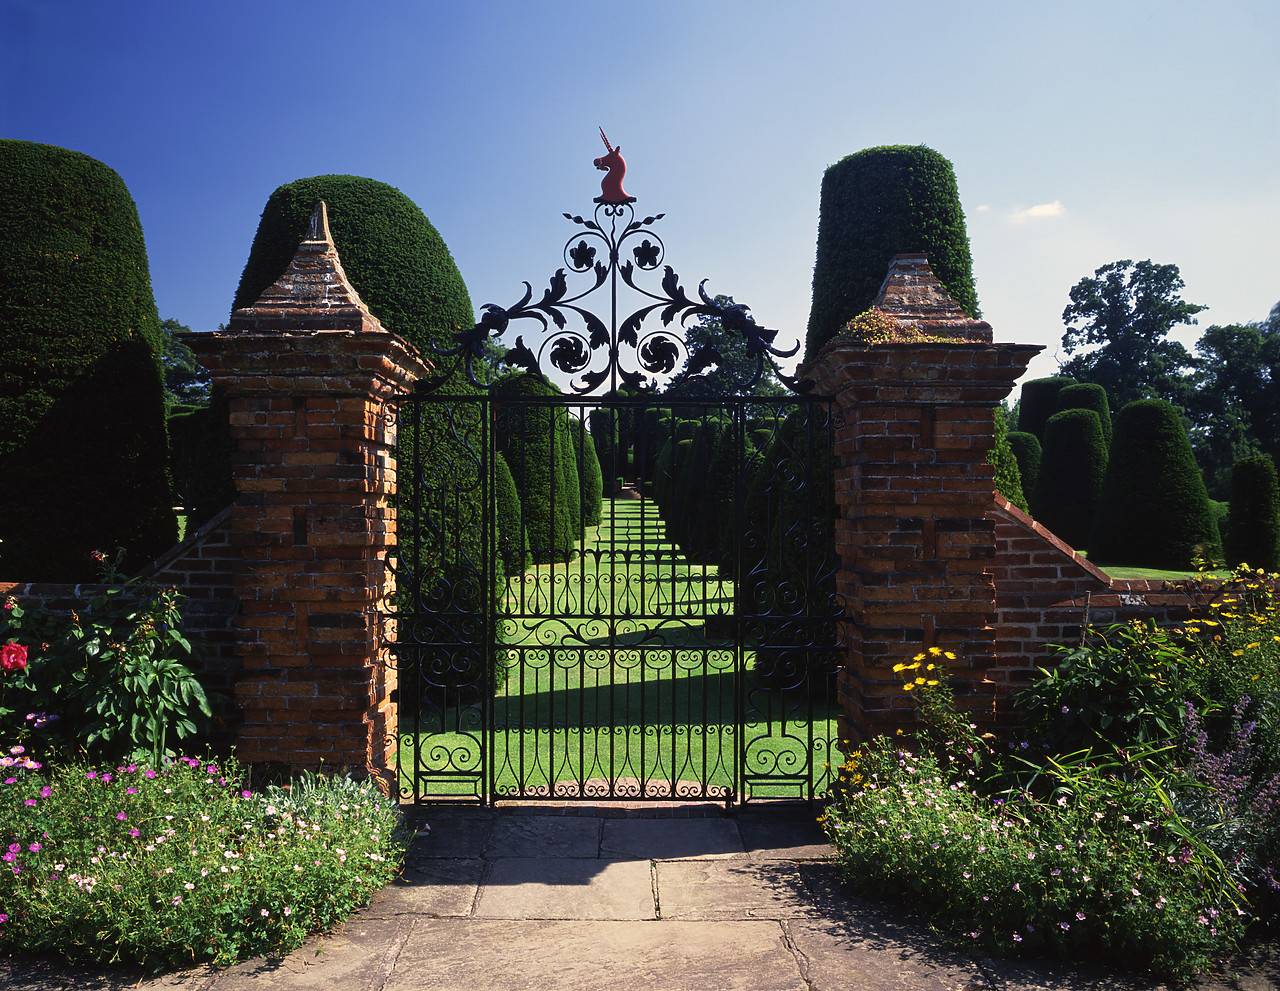 #892322 - Gateway into Yew Garden, Packwood House, Lapworth, Warwickshire, England